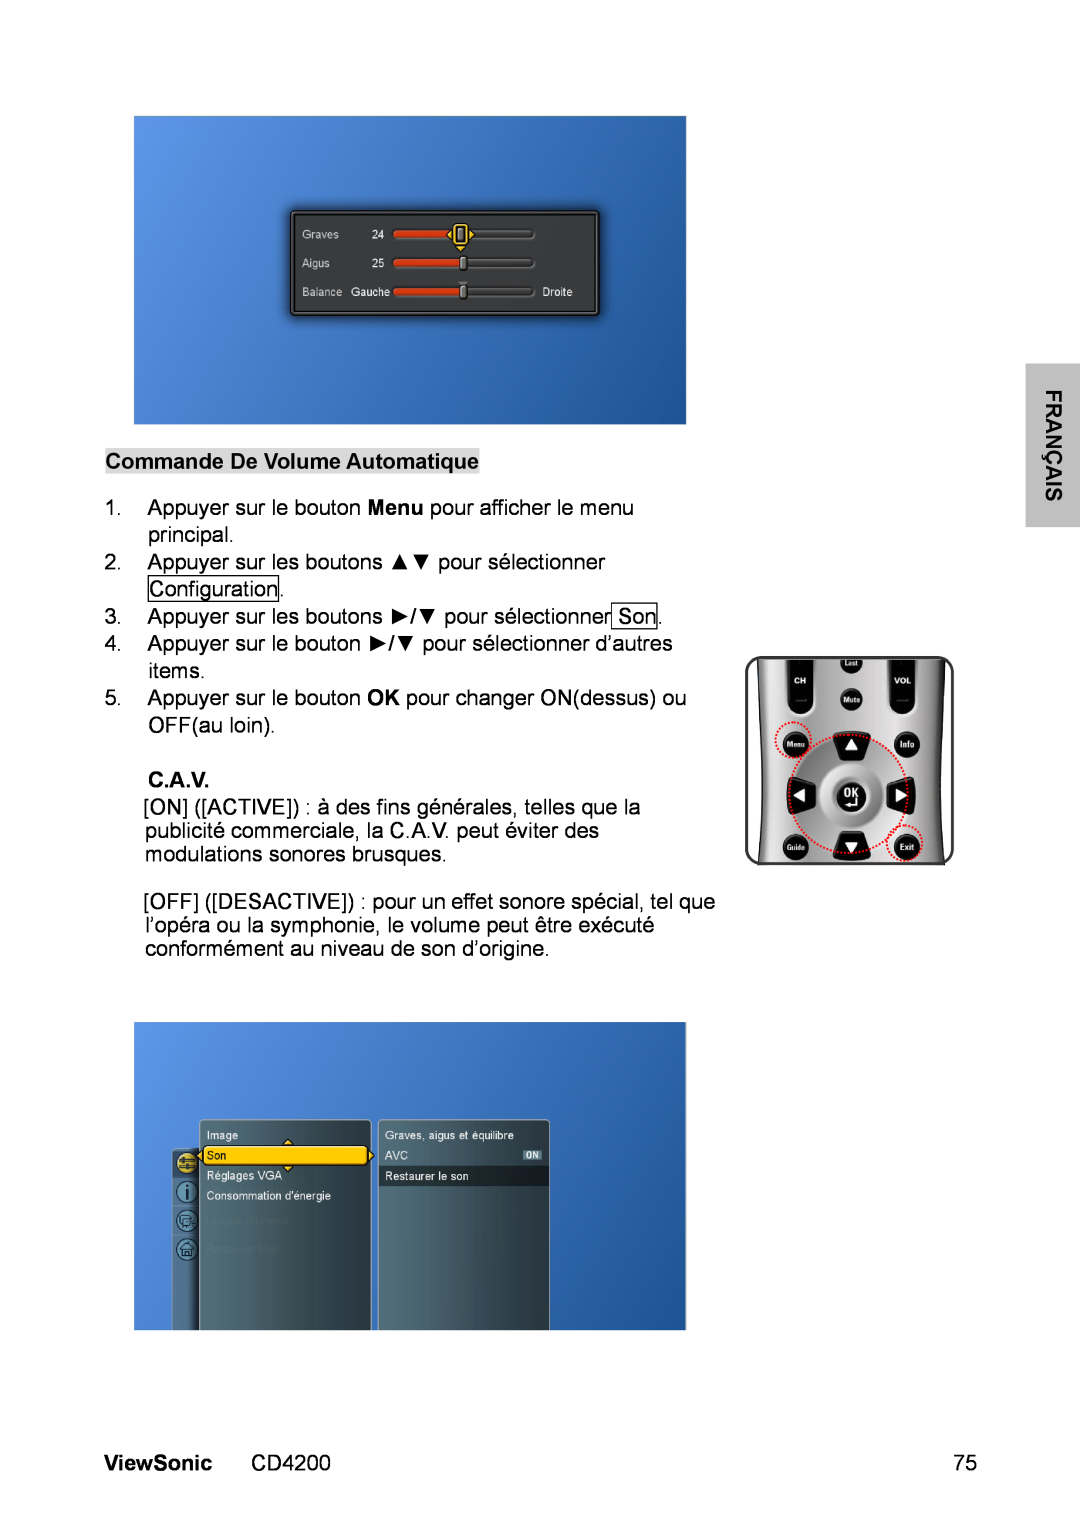 ViewSonic manual Commande De Volume Automatique, C.A.V, Français, ViewSonic CD4200 